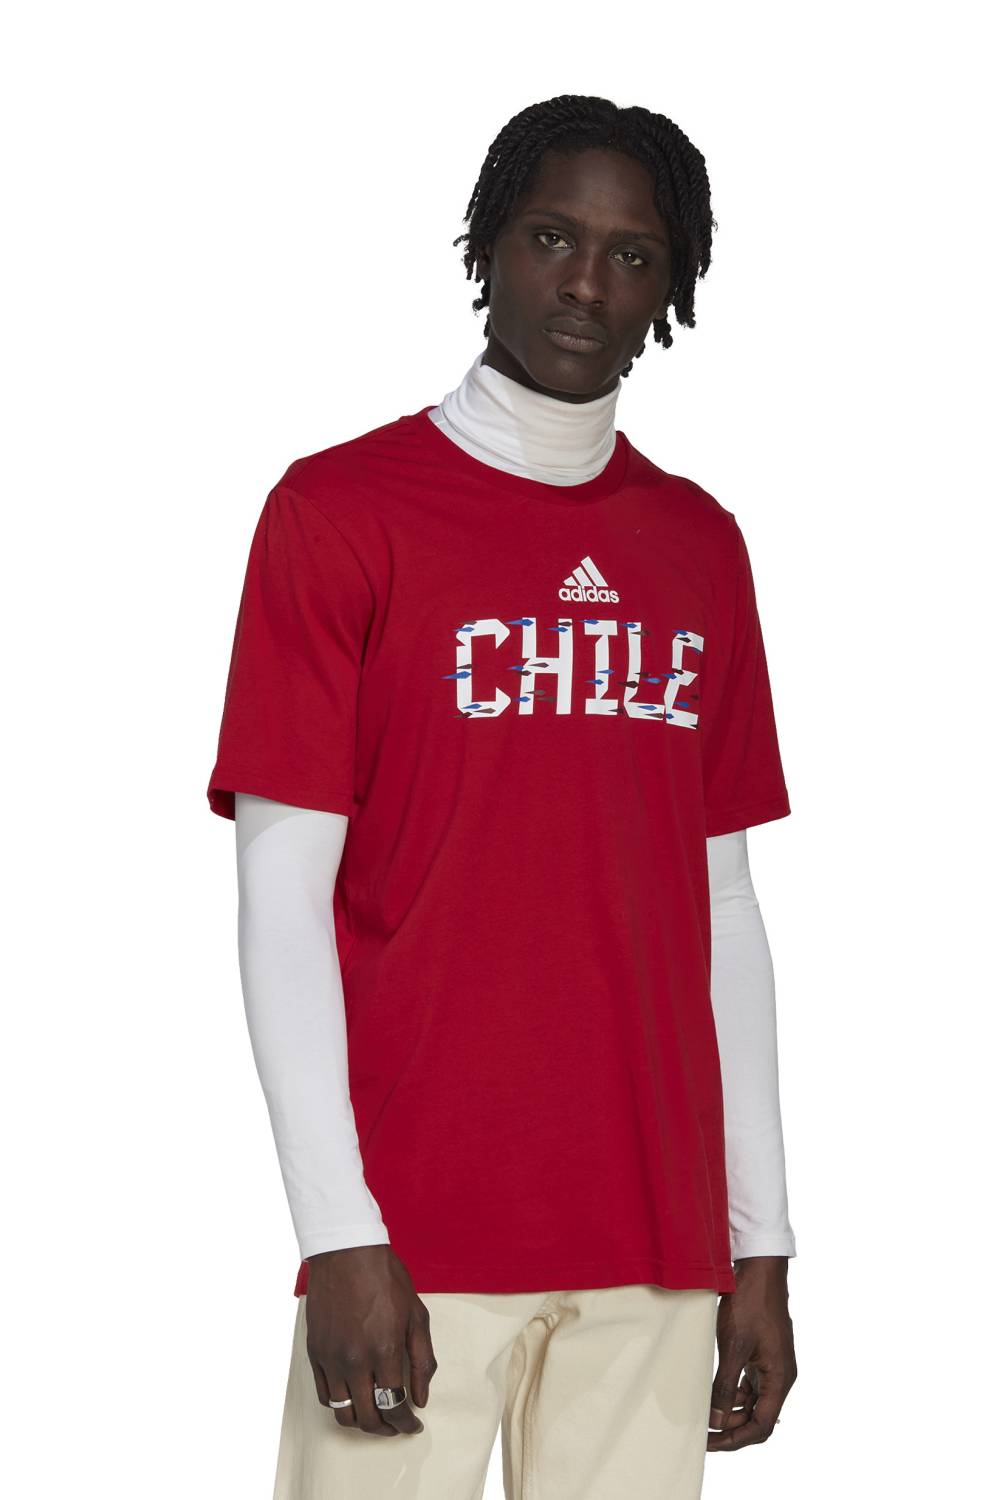 ADIDAS - Polera Chile Hombre Adidas